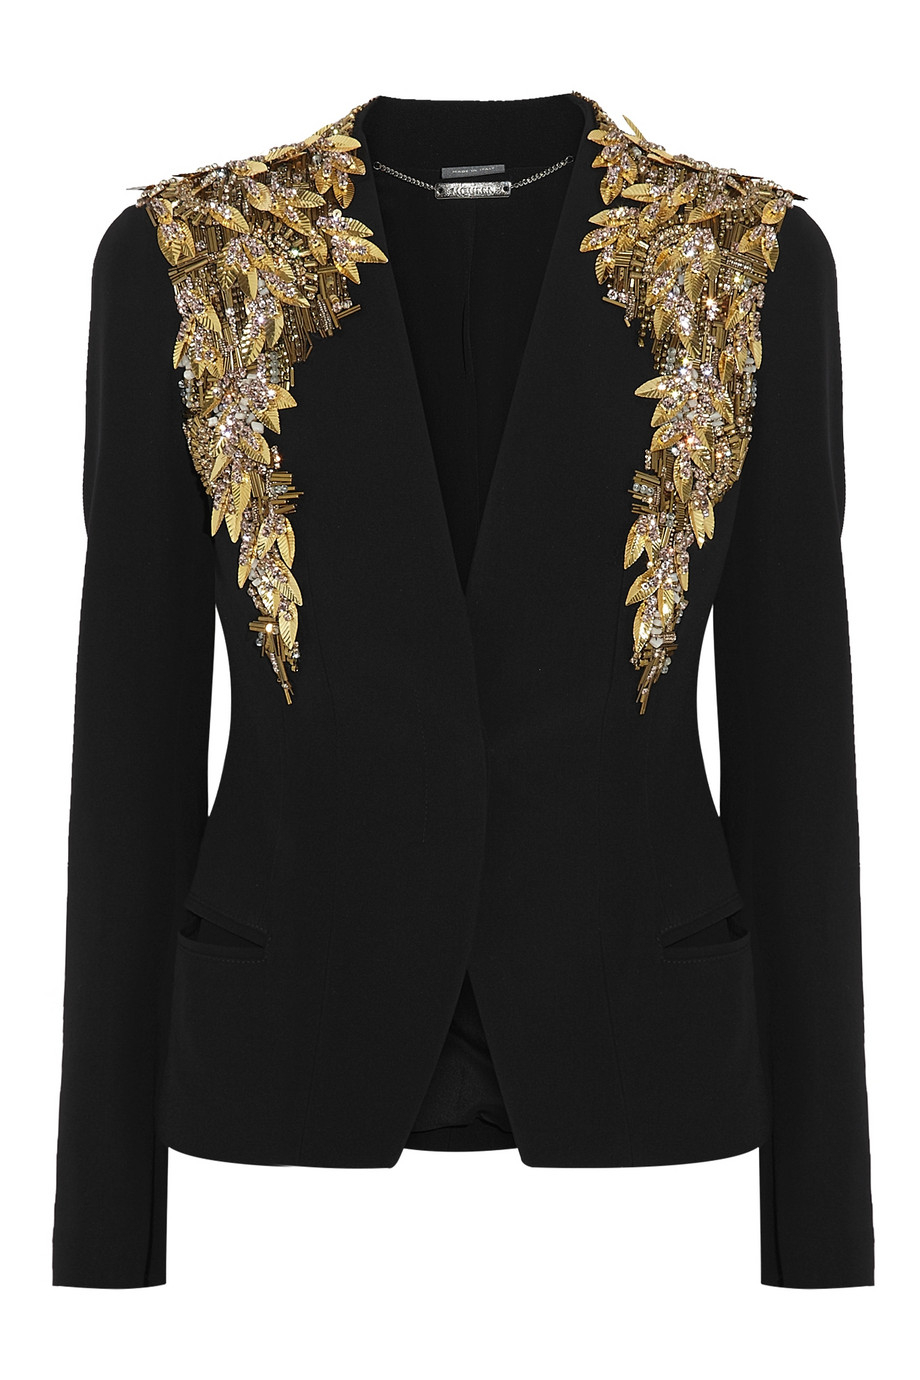 Alexander McQueen Embellished Crepe Jacket in Black - Lyst